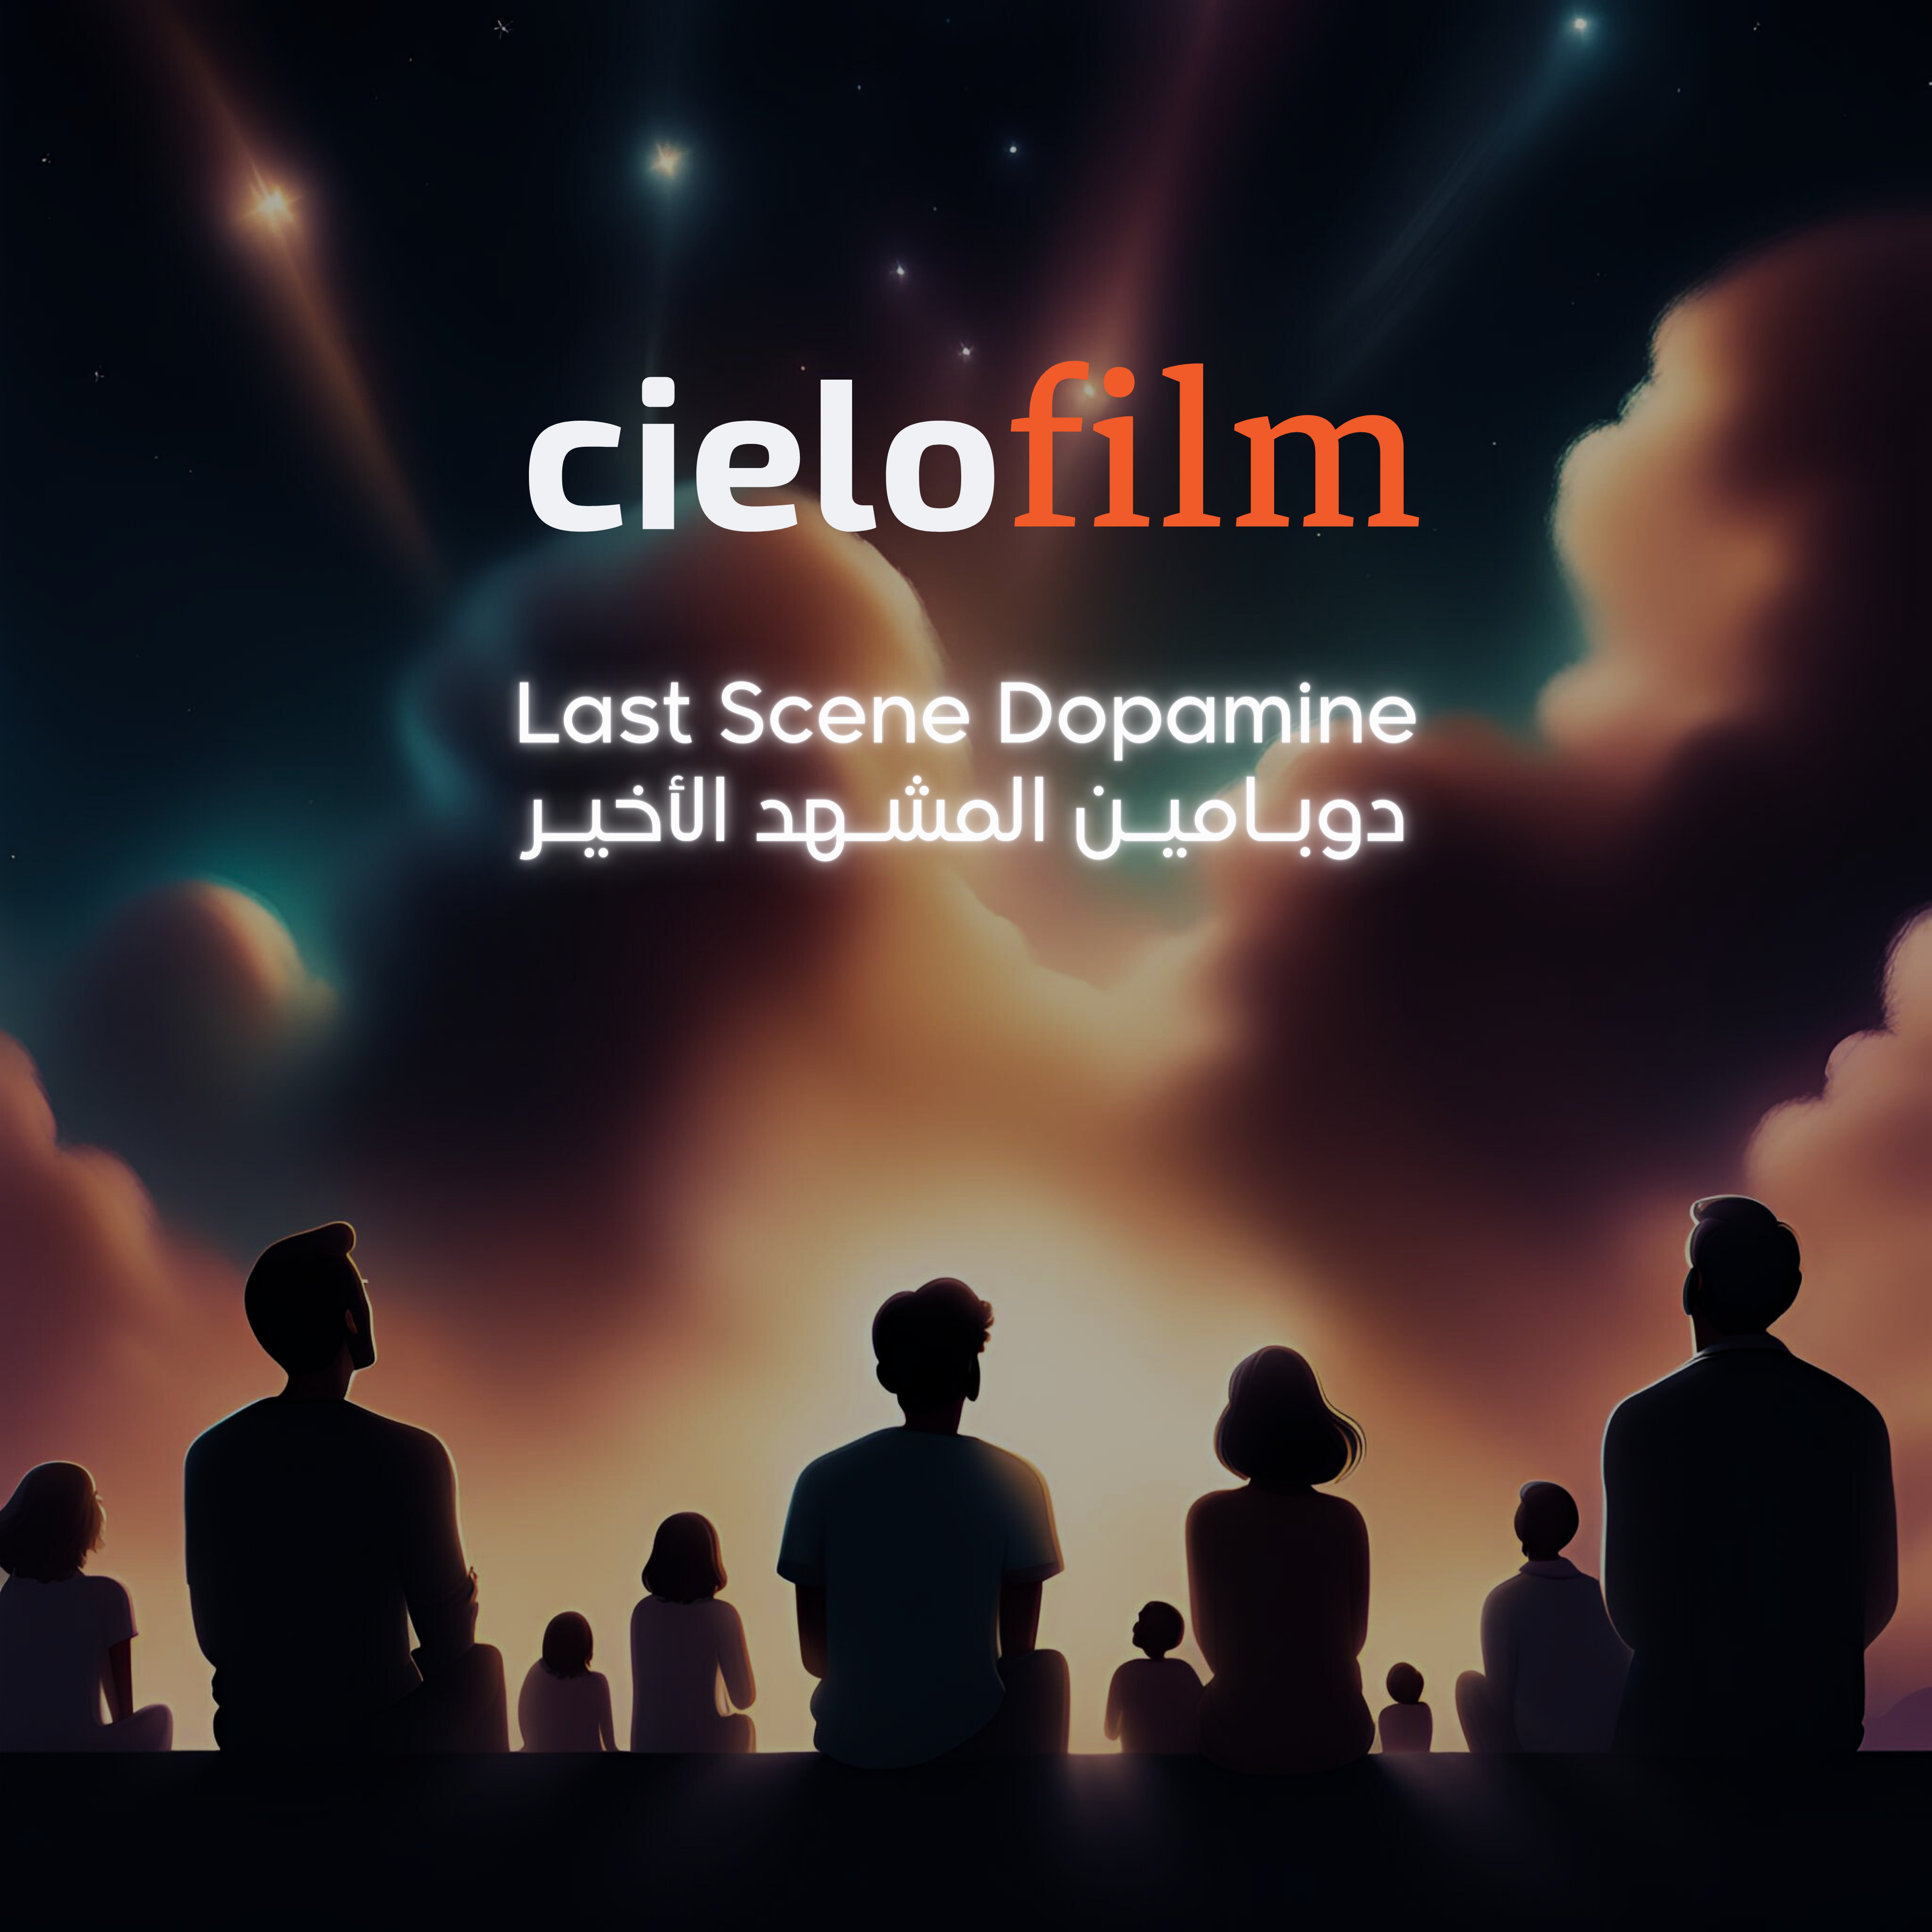 cielo film by cieloverse. Logo and Tagline: Last Scene Dopamine دوبامين المشهد الأخير